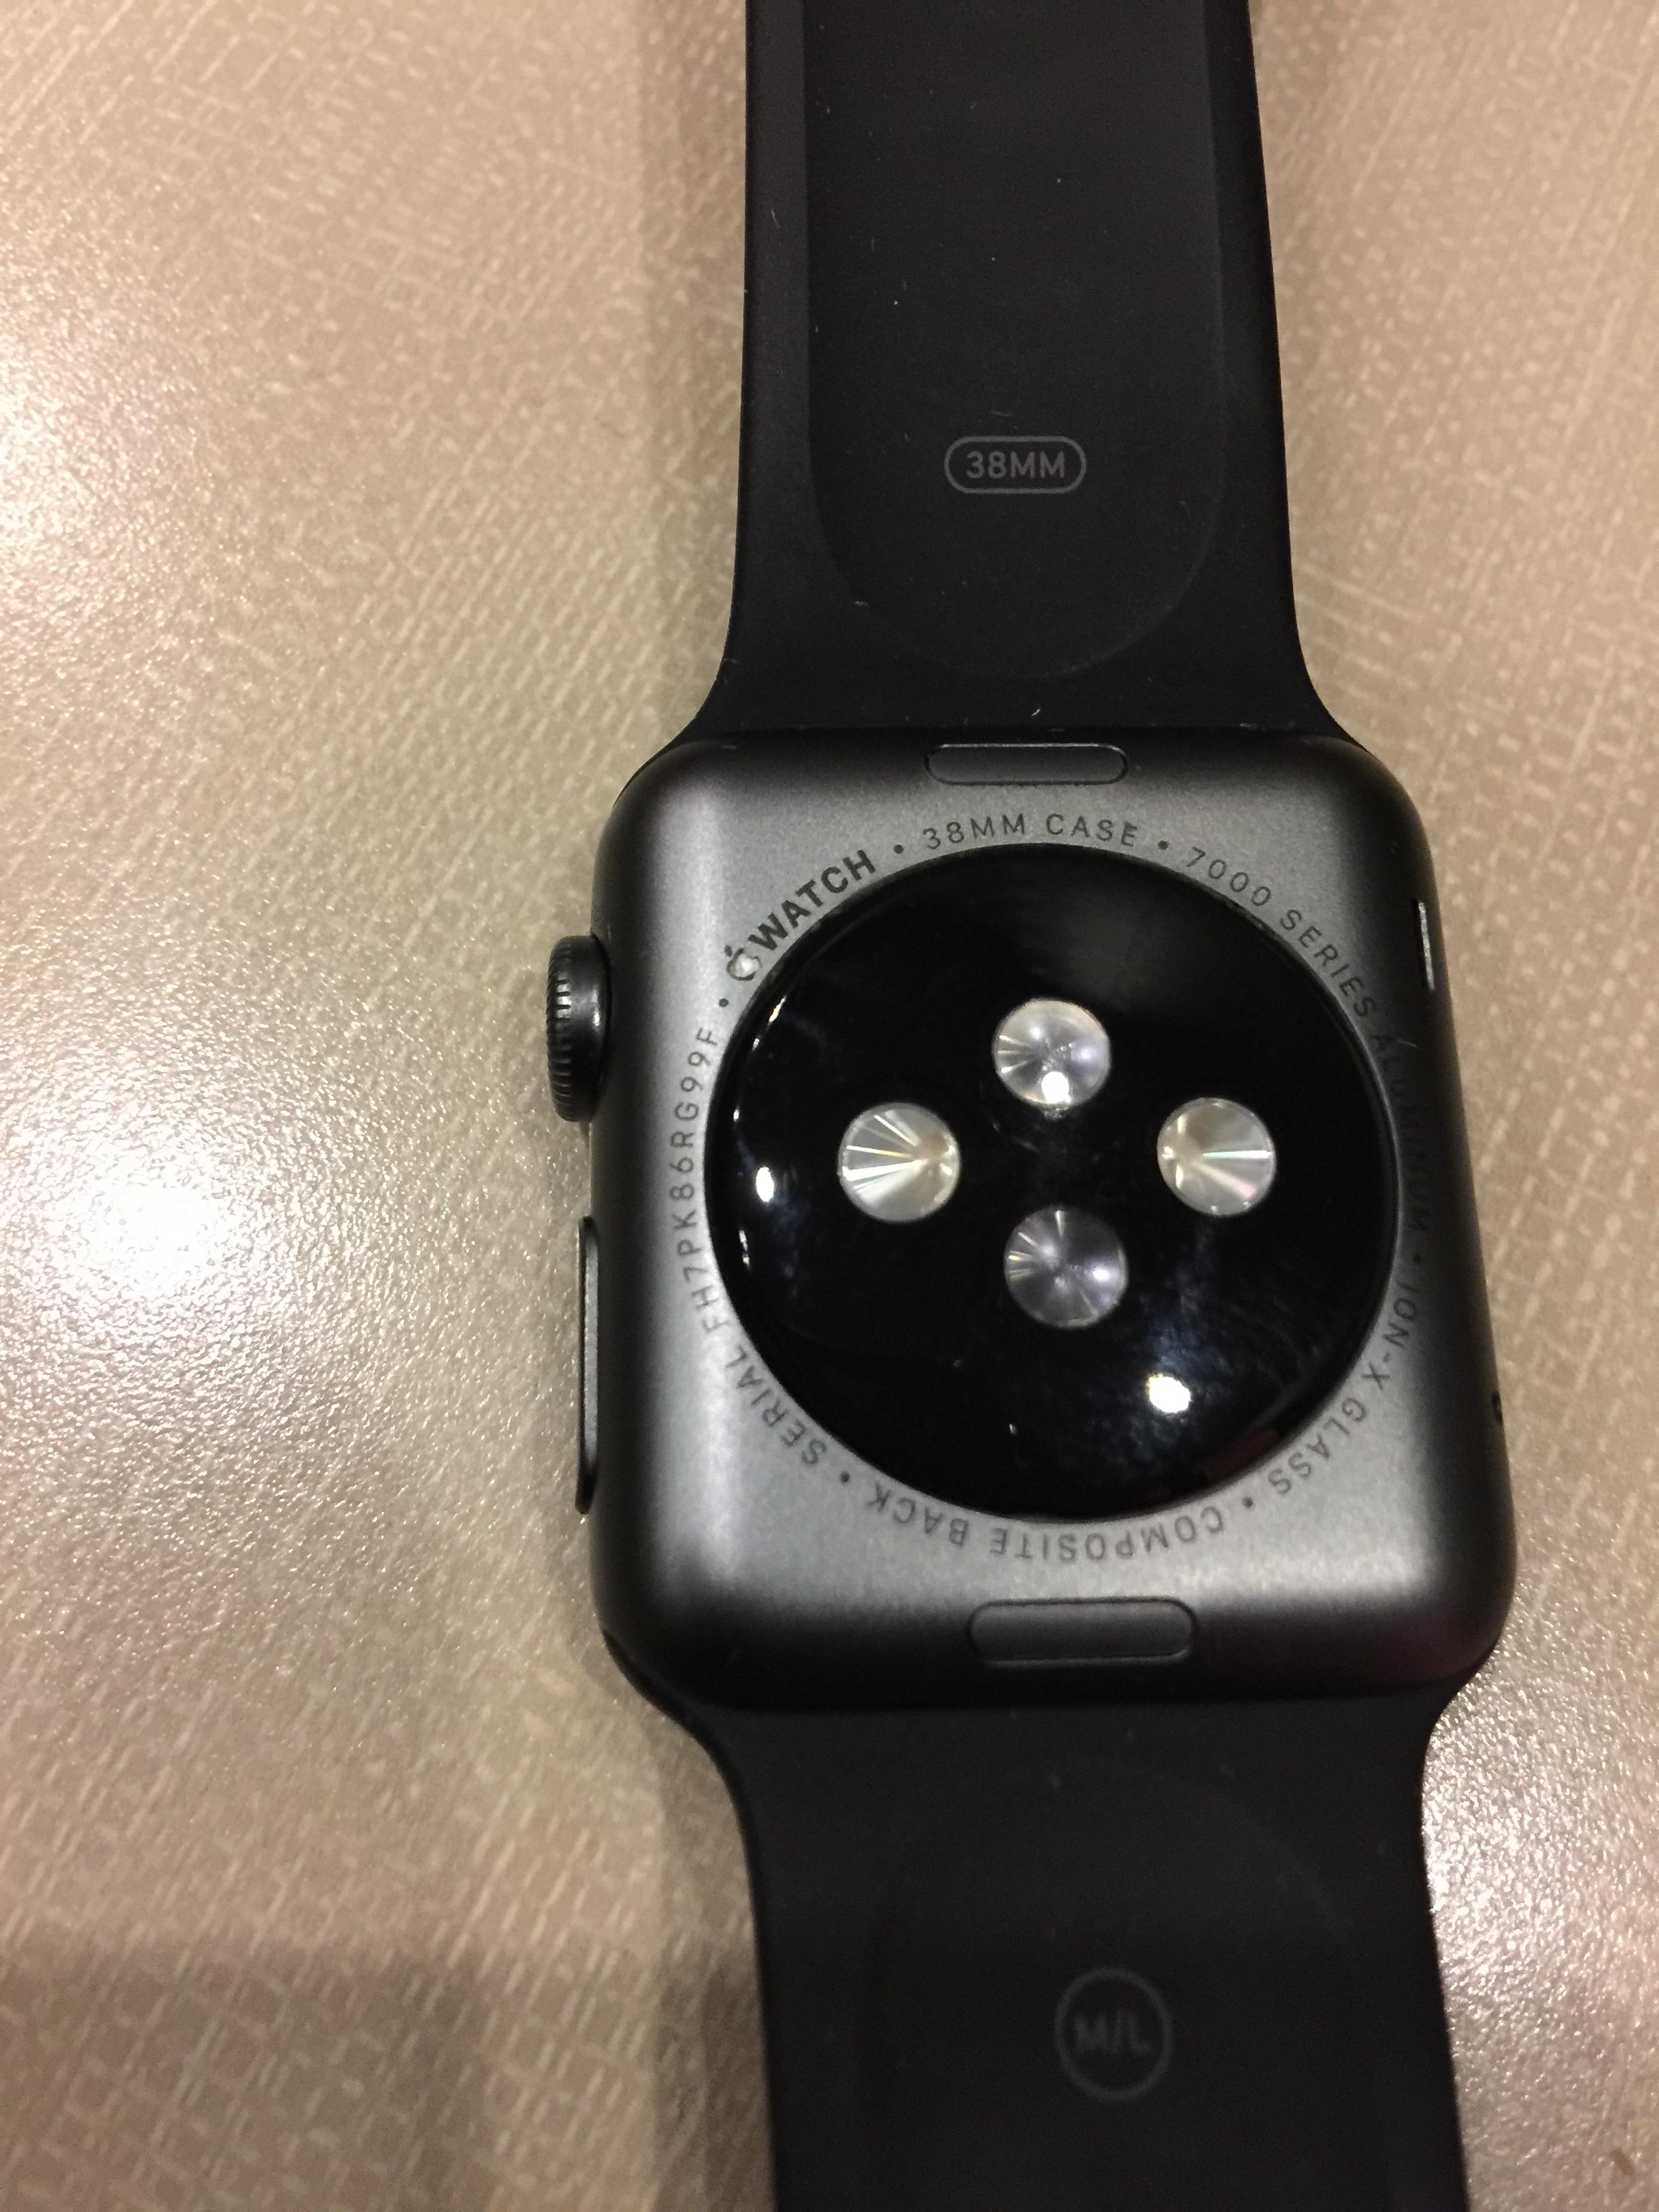 Apple Watch logo peeled off 2